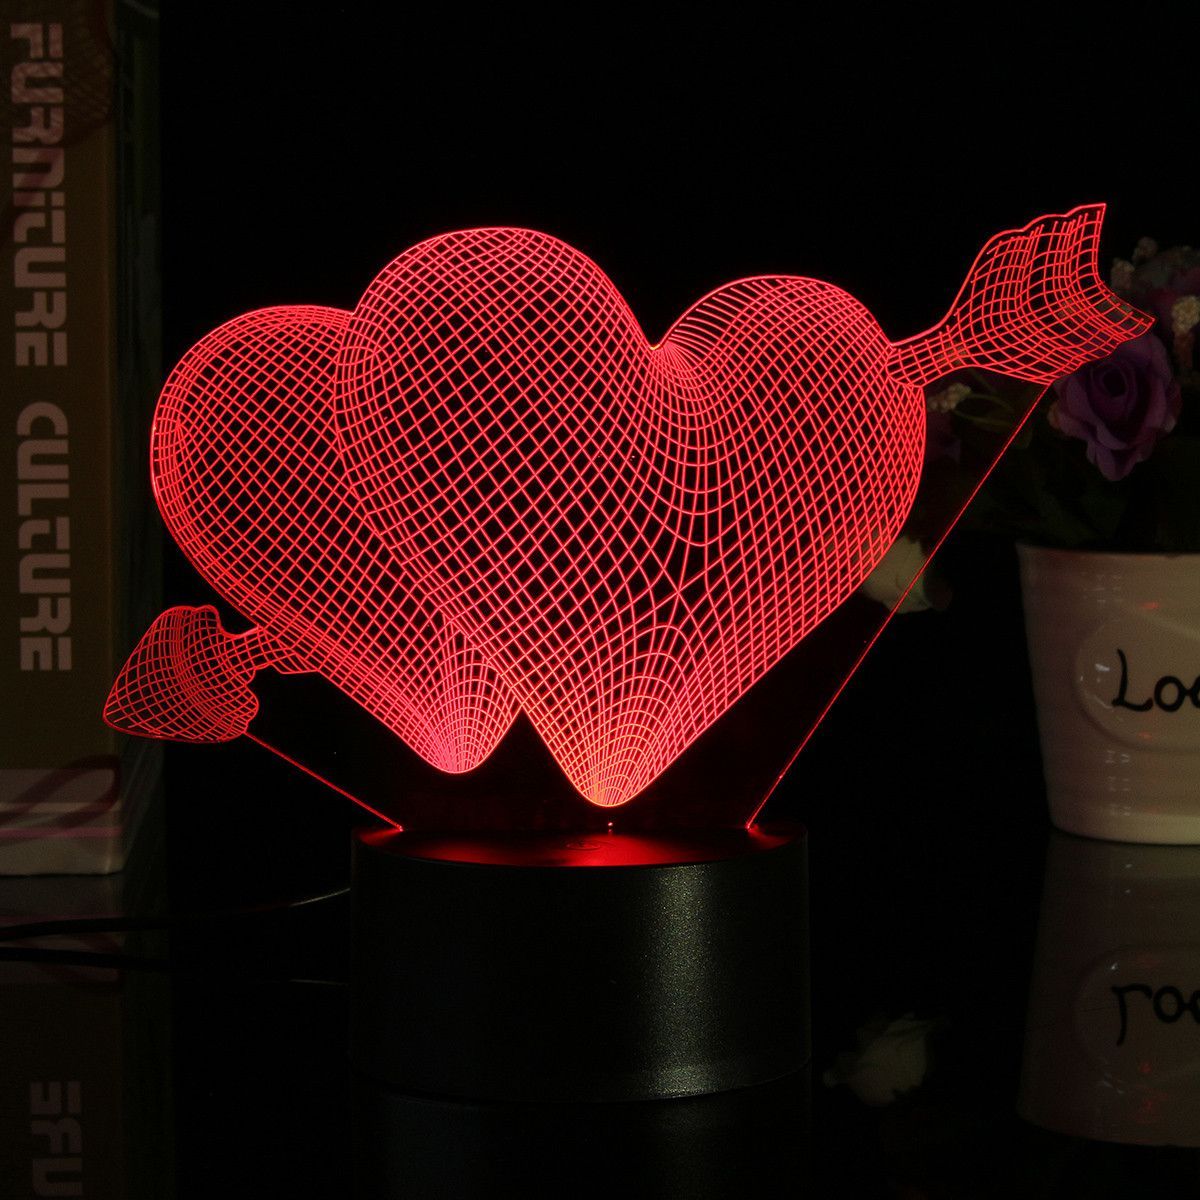 Love-Arrow-3D-Desk-Table-Lamp-7-Color-Change-LED-Night-Light-Party-Decor-Gift-1106455